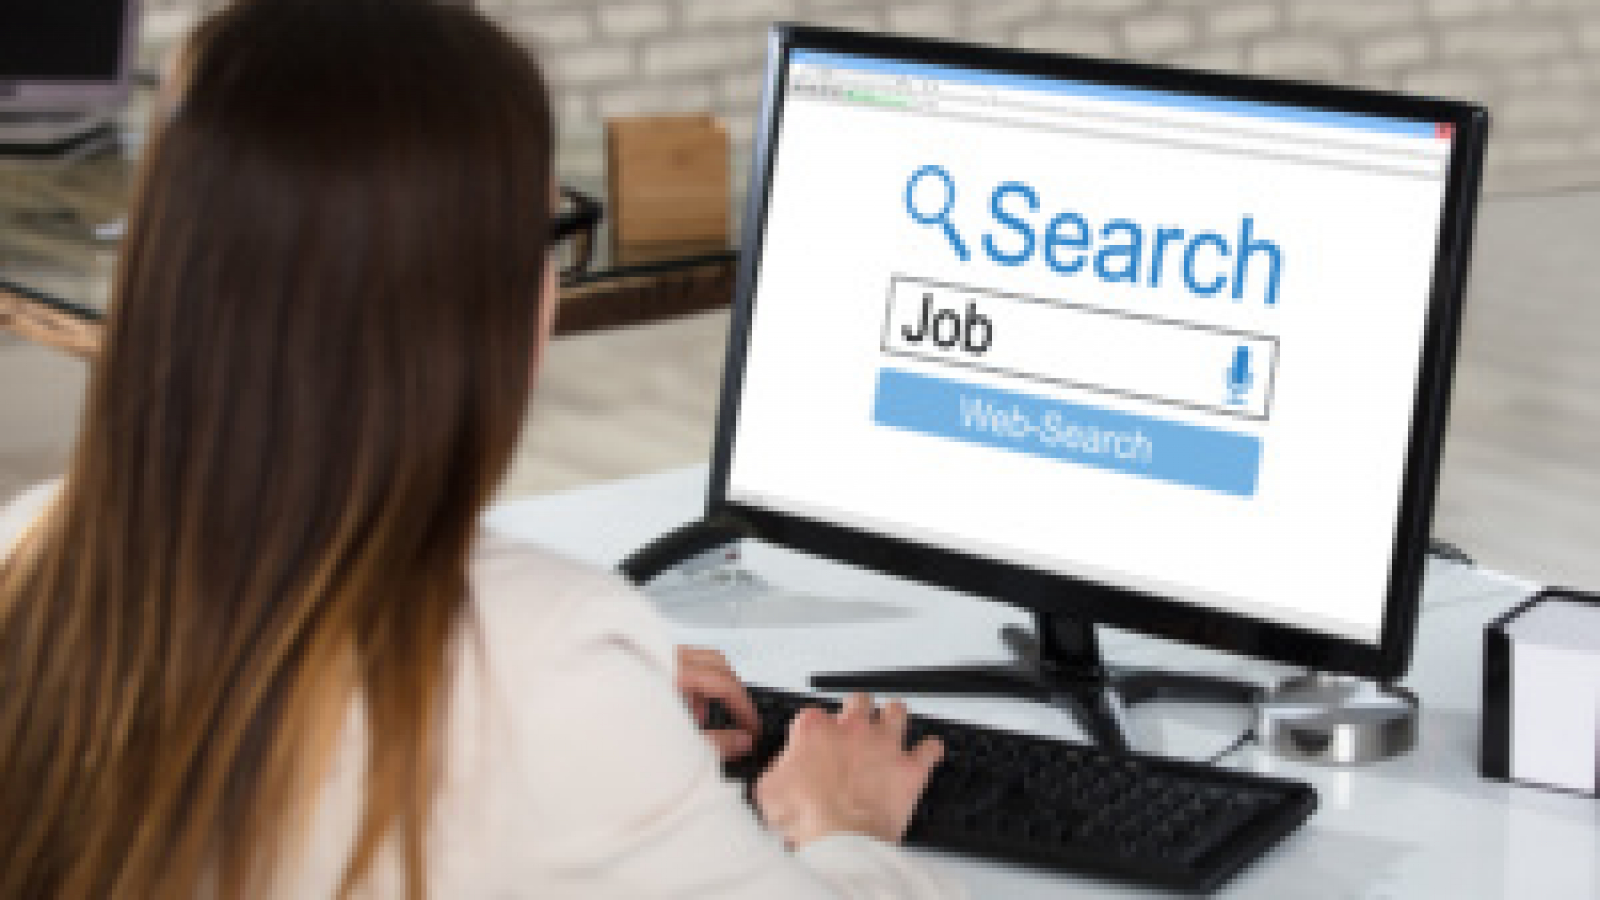 Businesswoman Searching Online Job In Office